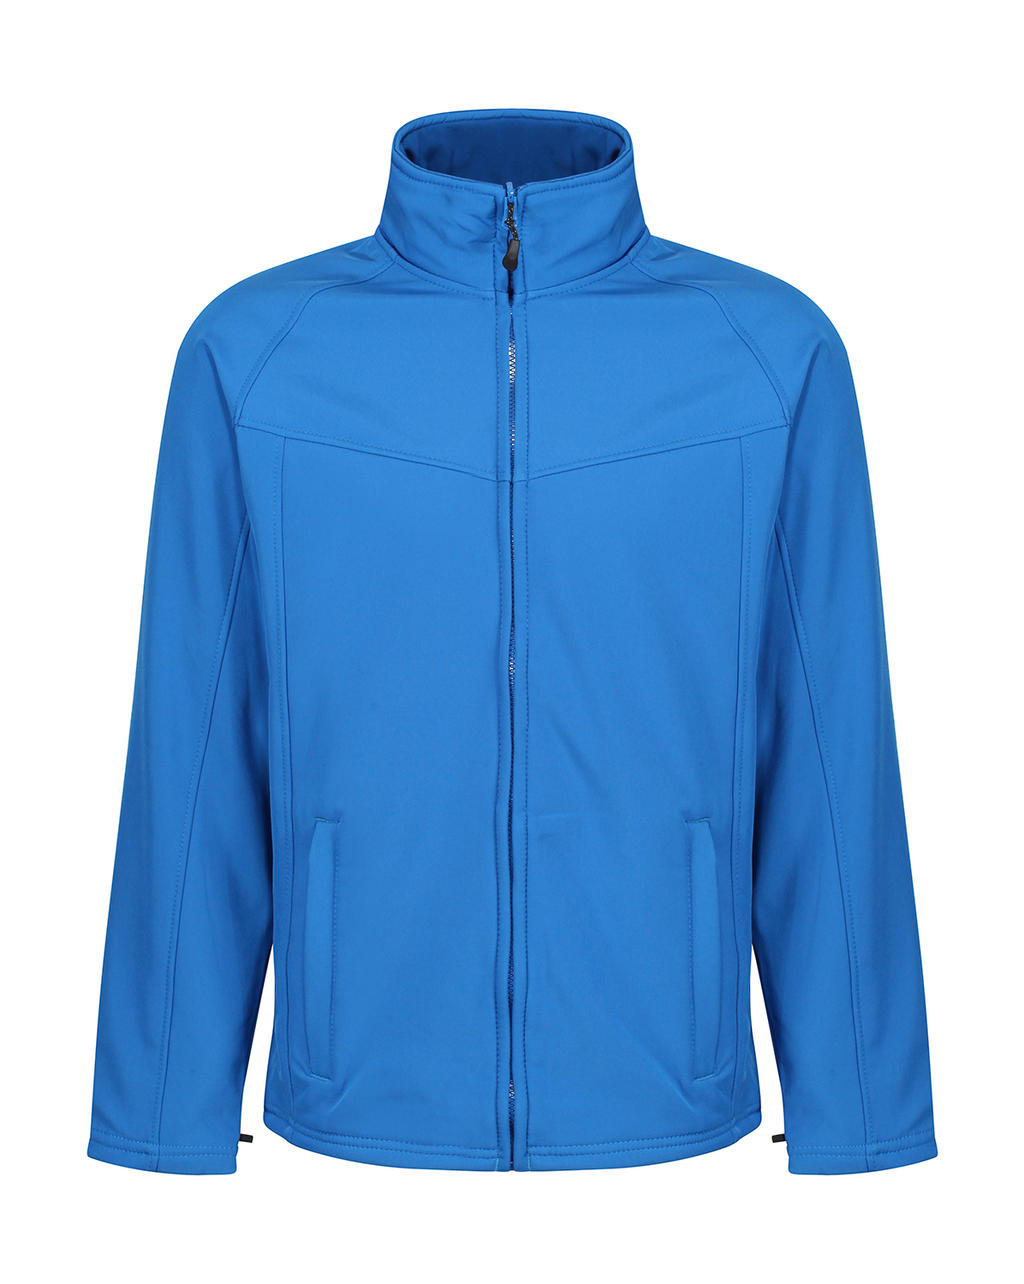 Pánská bunda Regatta Uproar Softshell - světle modrá, XL